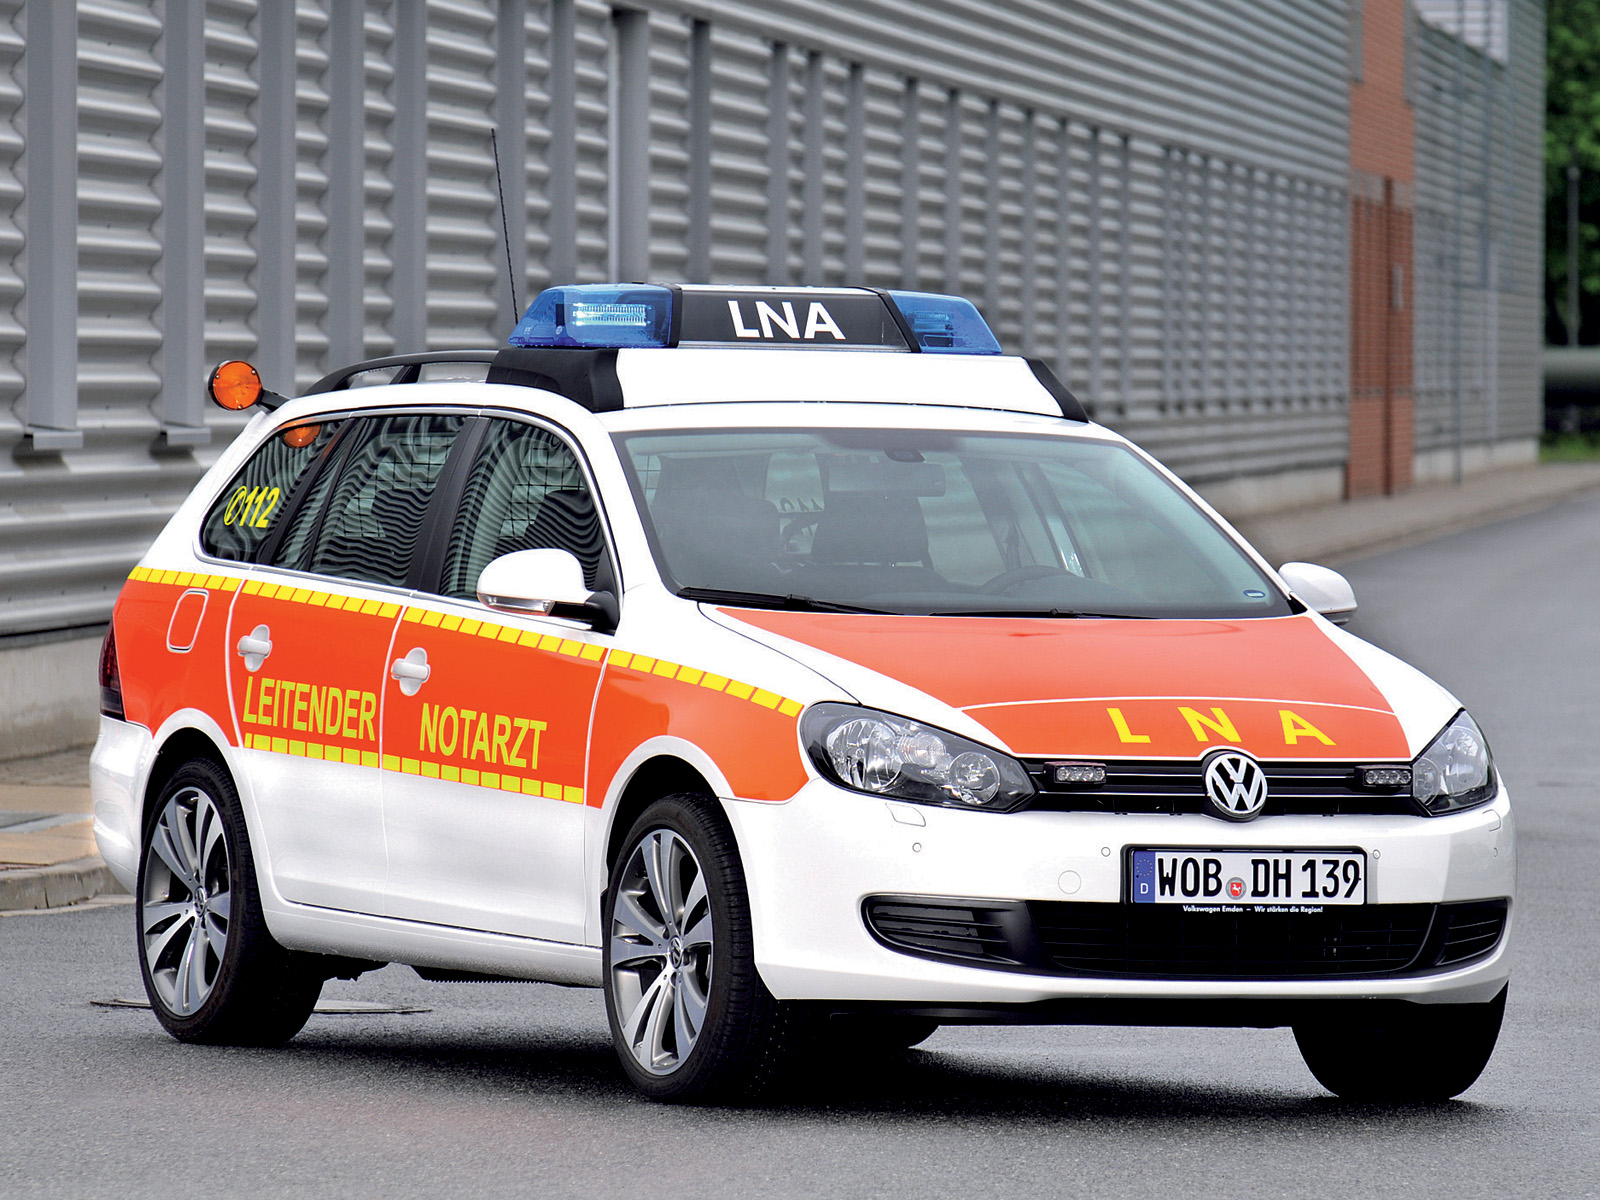 2010, Volkswagen, Golf, Variant, Notarzt, Type 5k, Ambulance, Emergency Wallpaper